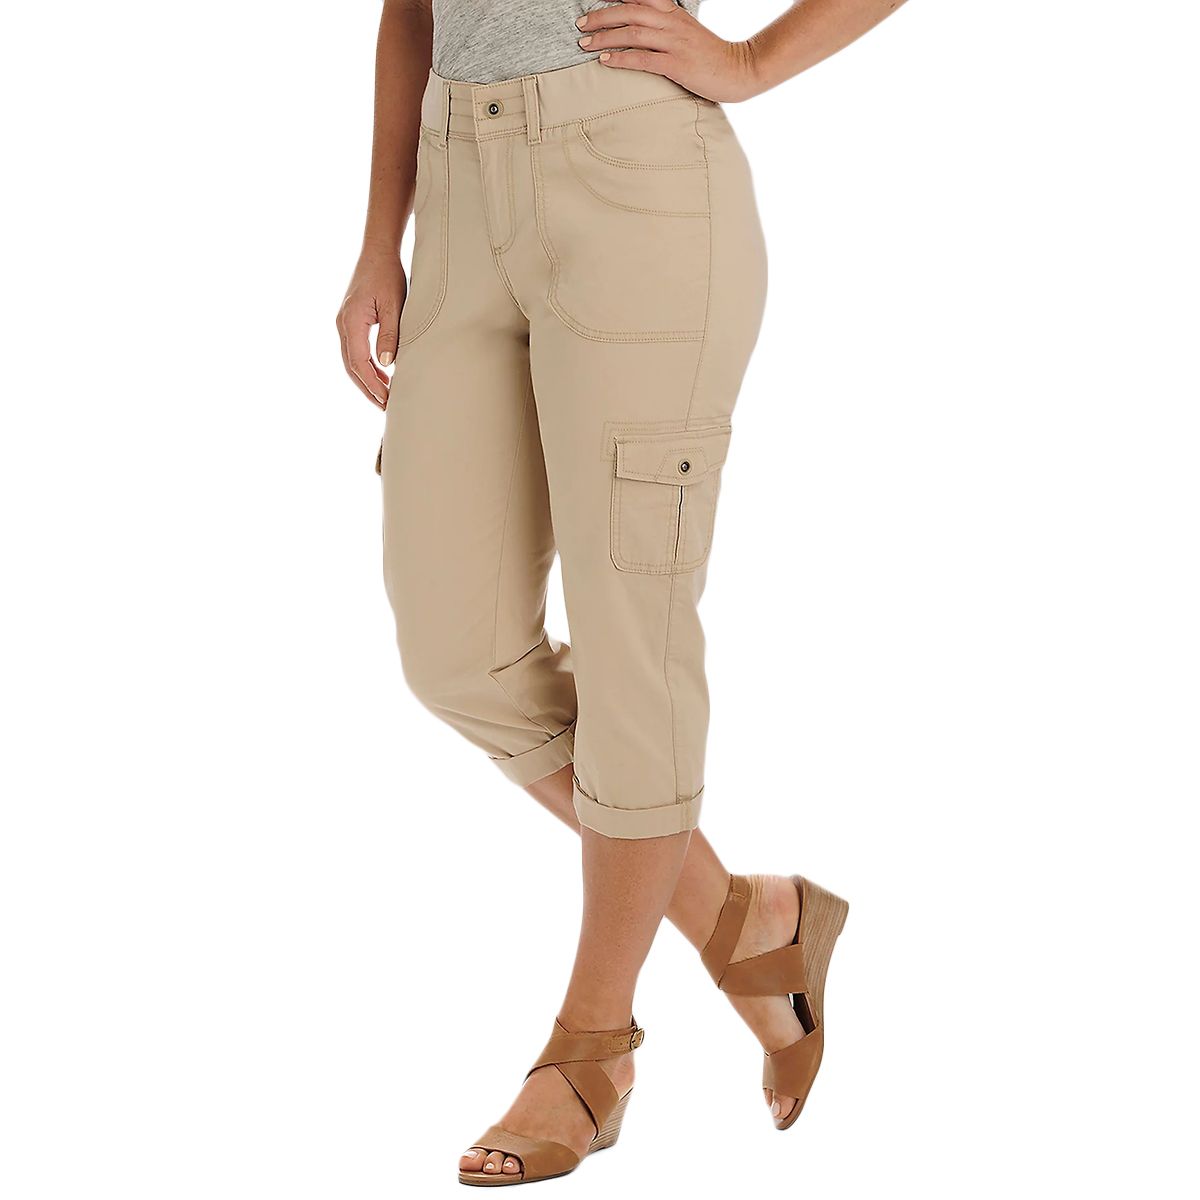 Lolmot Womens Capri Pants Elastic Waist Hiking Button Zipper Crop Pants  Casual Harem Pants Slim Bound Feet Tapered Pant Cargo Pants with Pockets